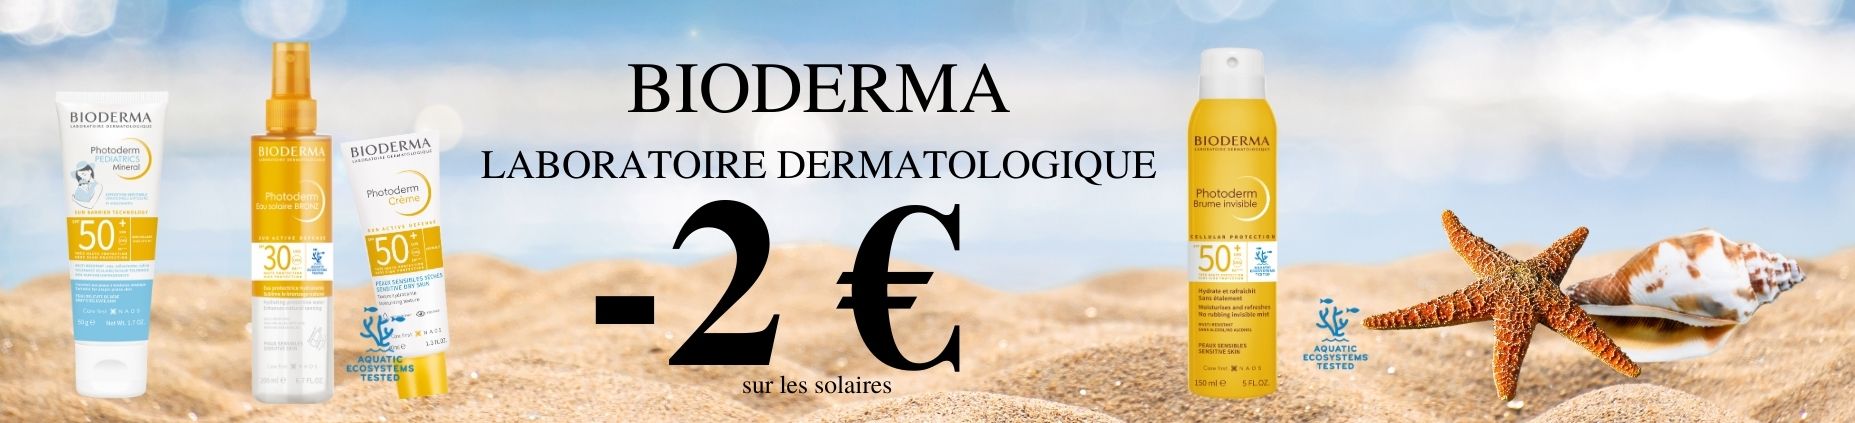 Bioderma promo été moins 2 euros